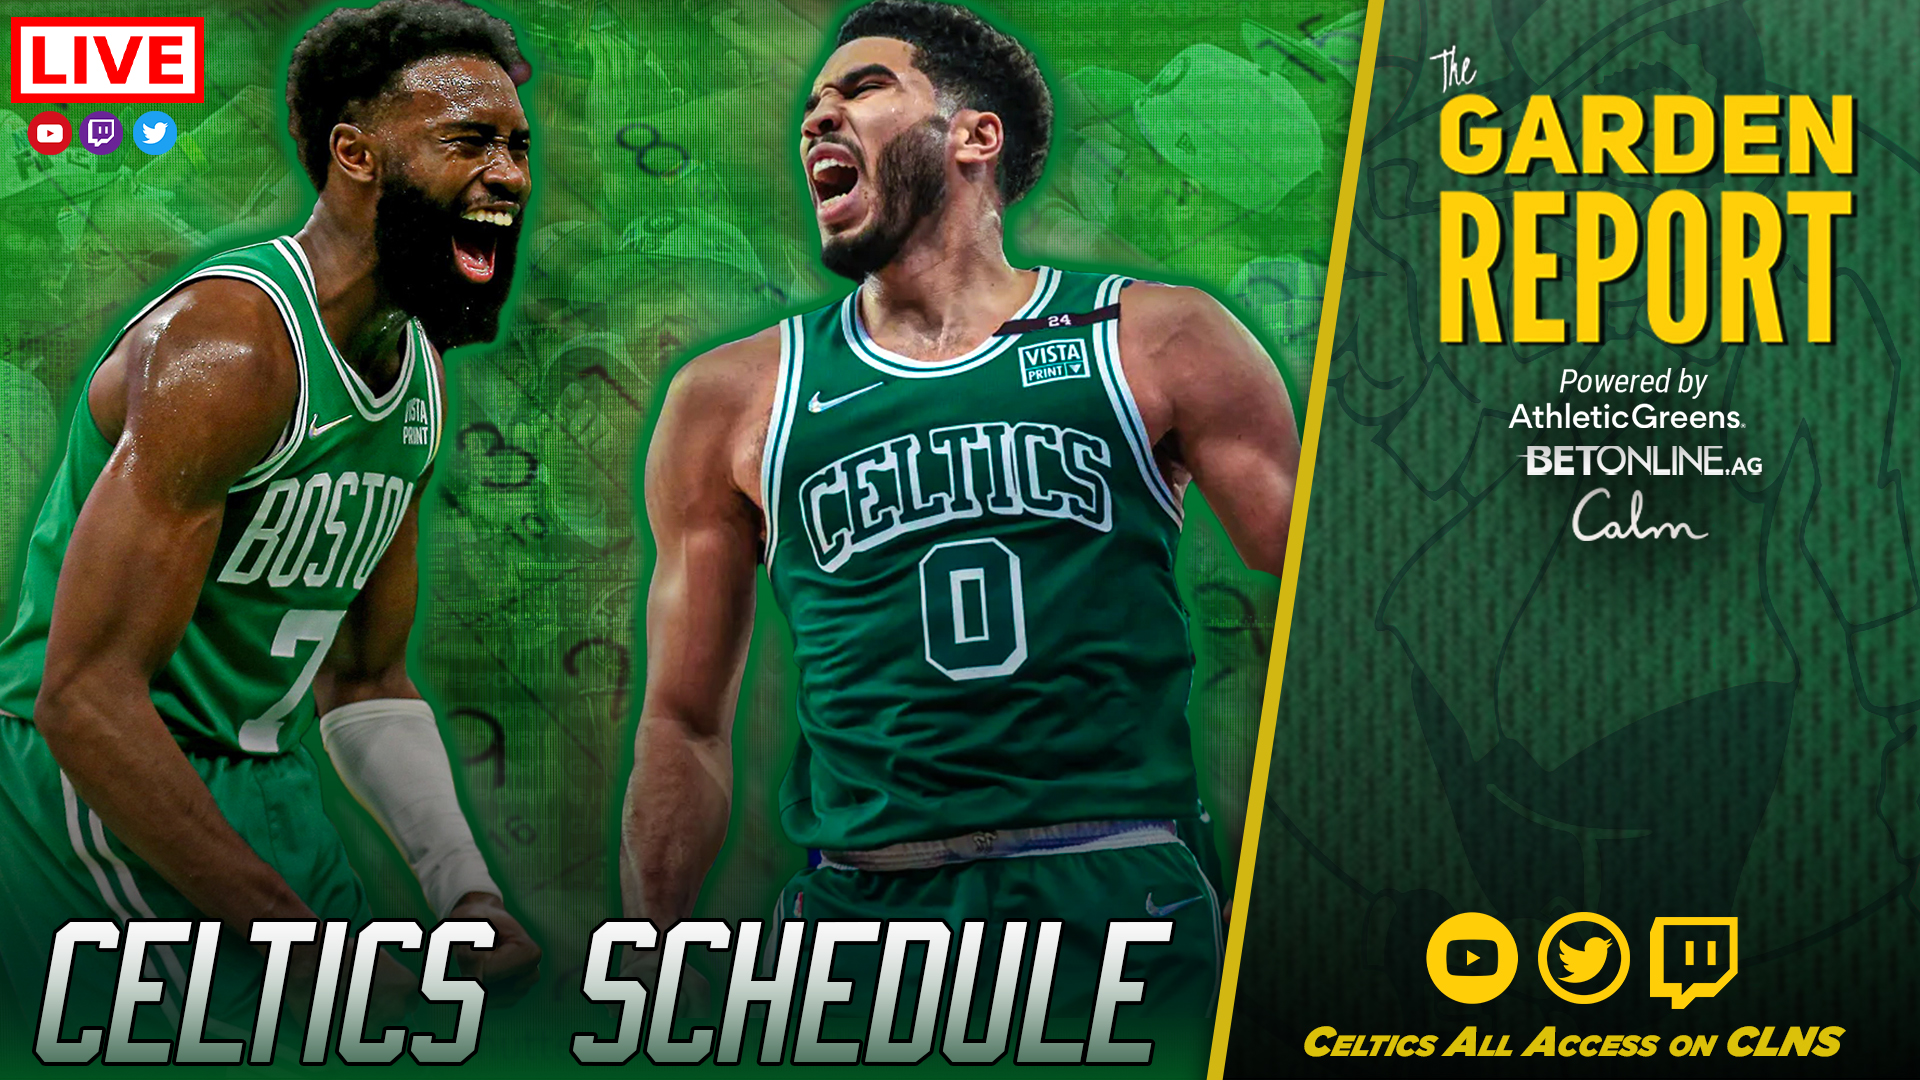 Celtics Schedule Released for 2022-23 Season - CLNS Media